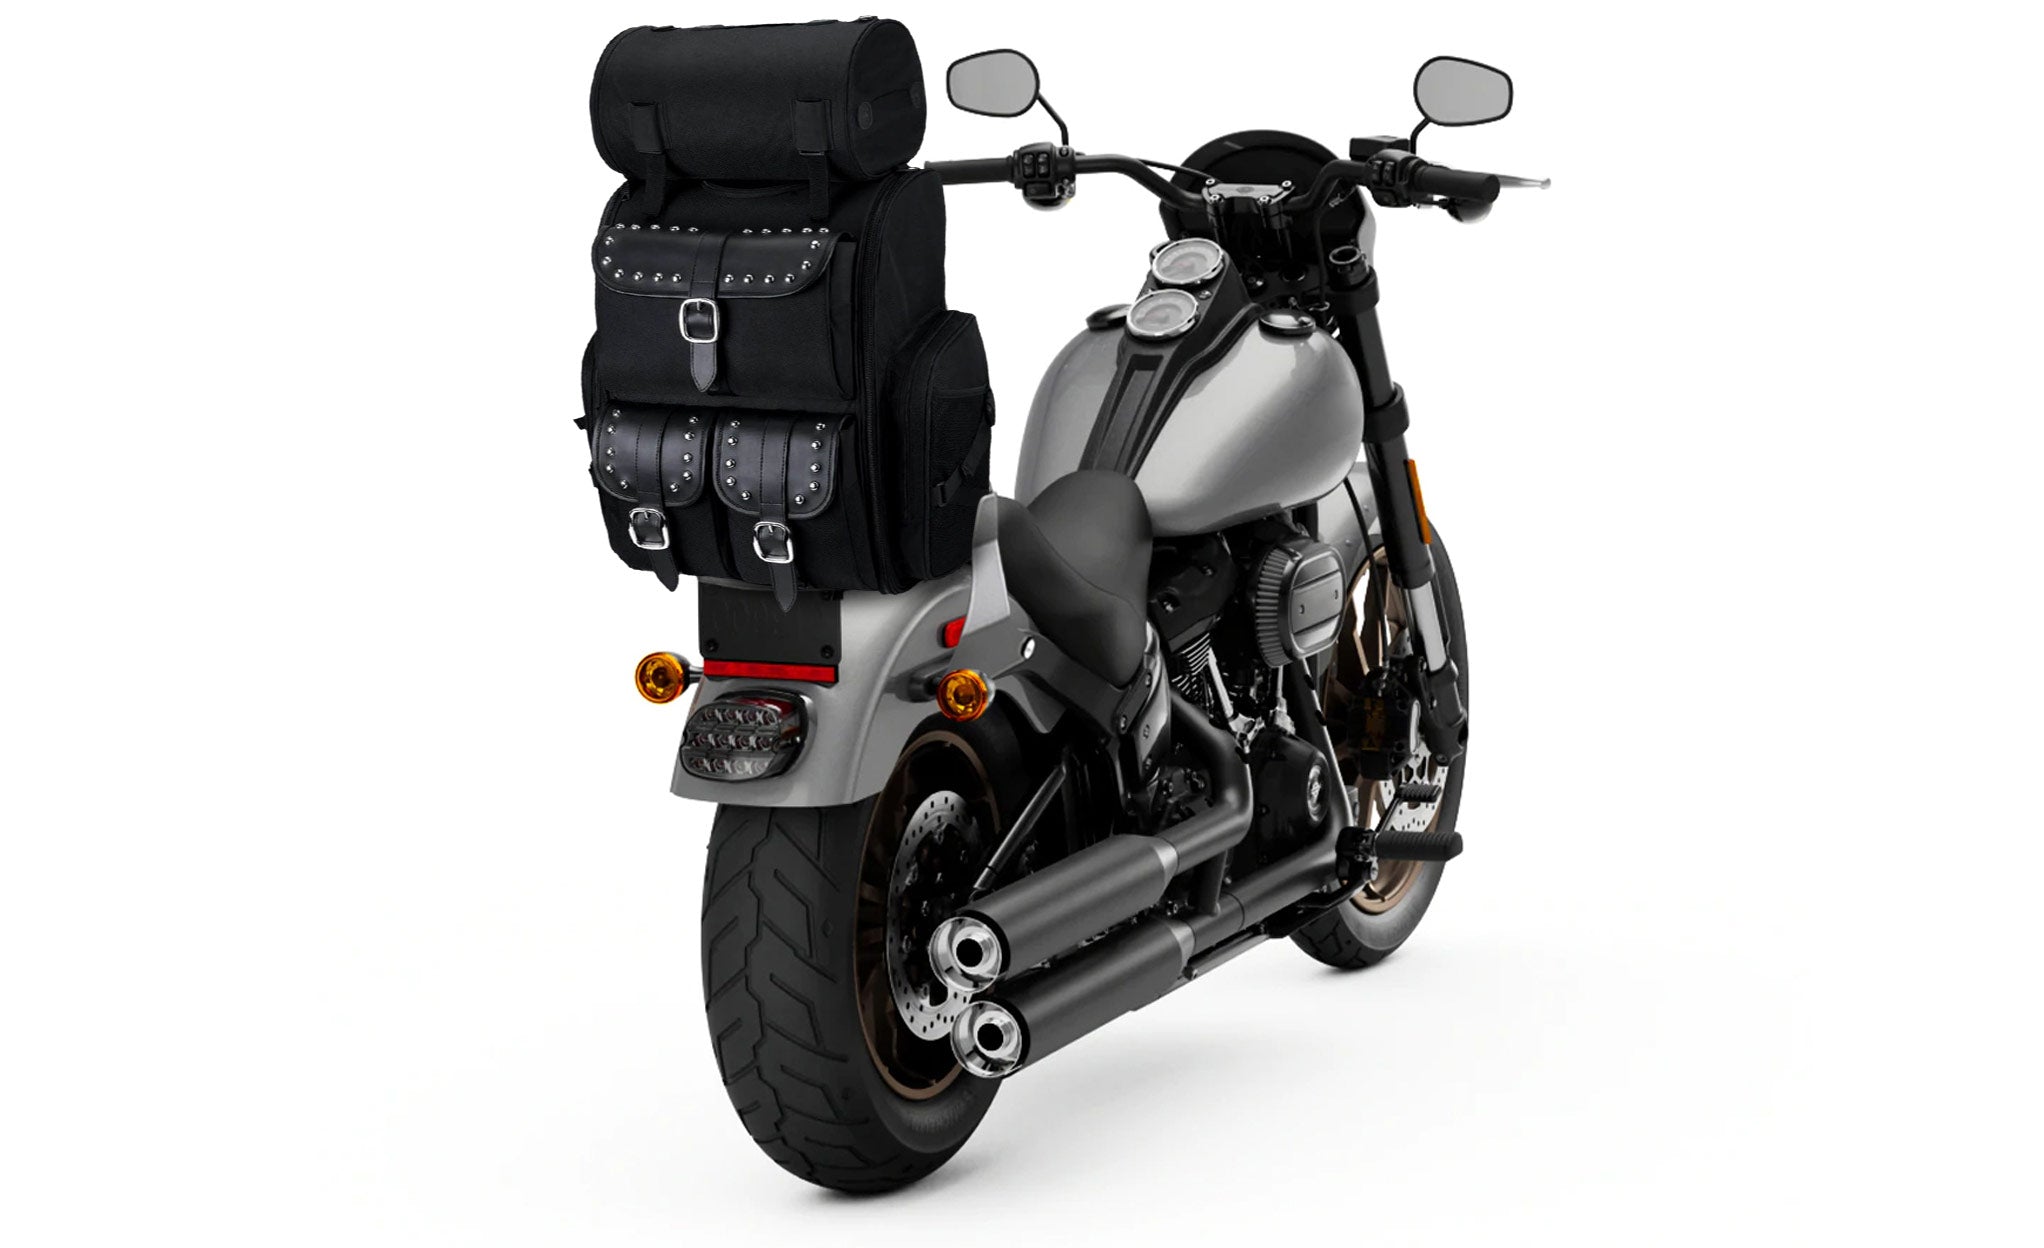 Viking Highway Extra Large Studded Yamaha Motorcycle Tail Bag Bag on Bike View @expand